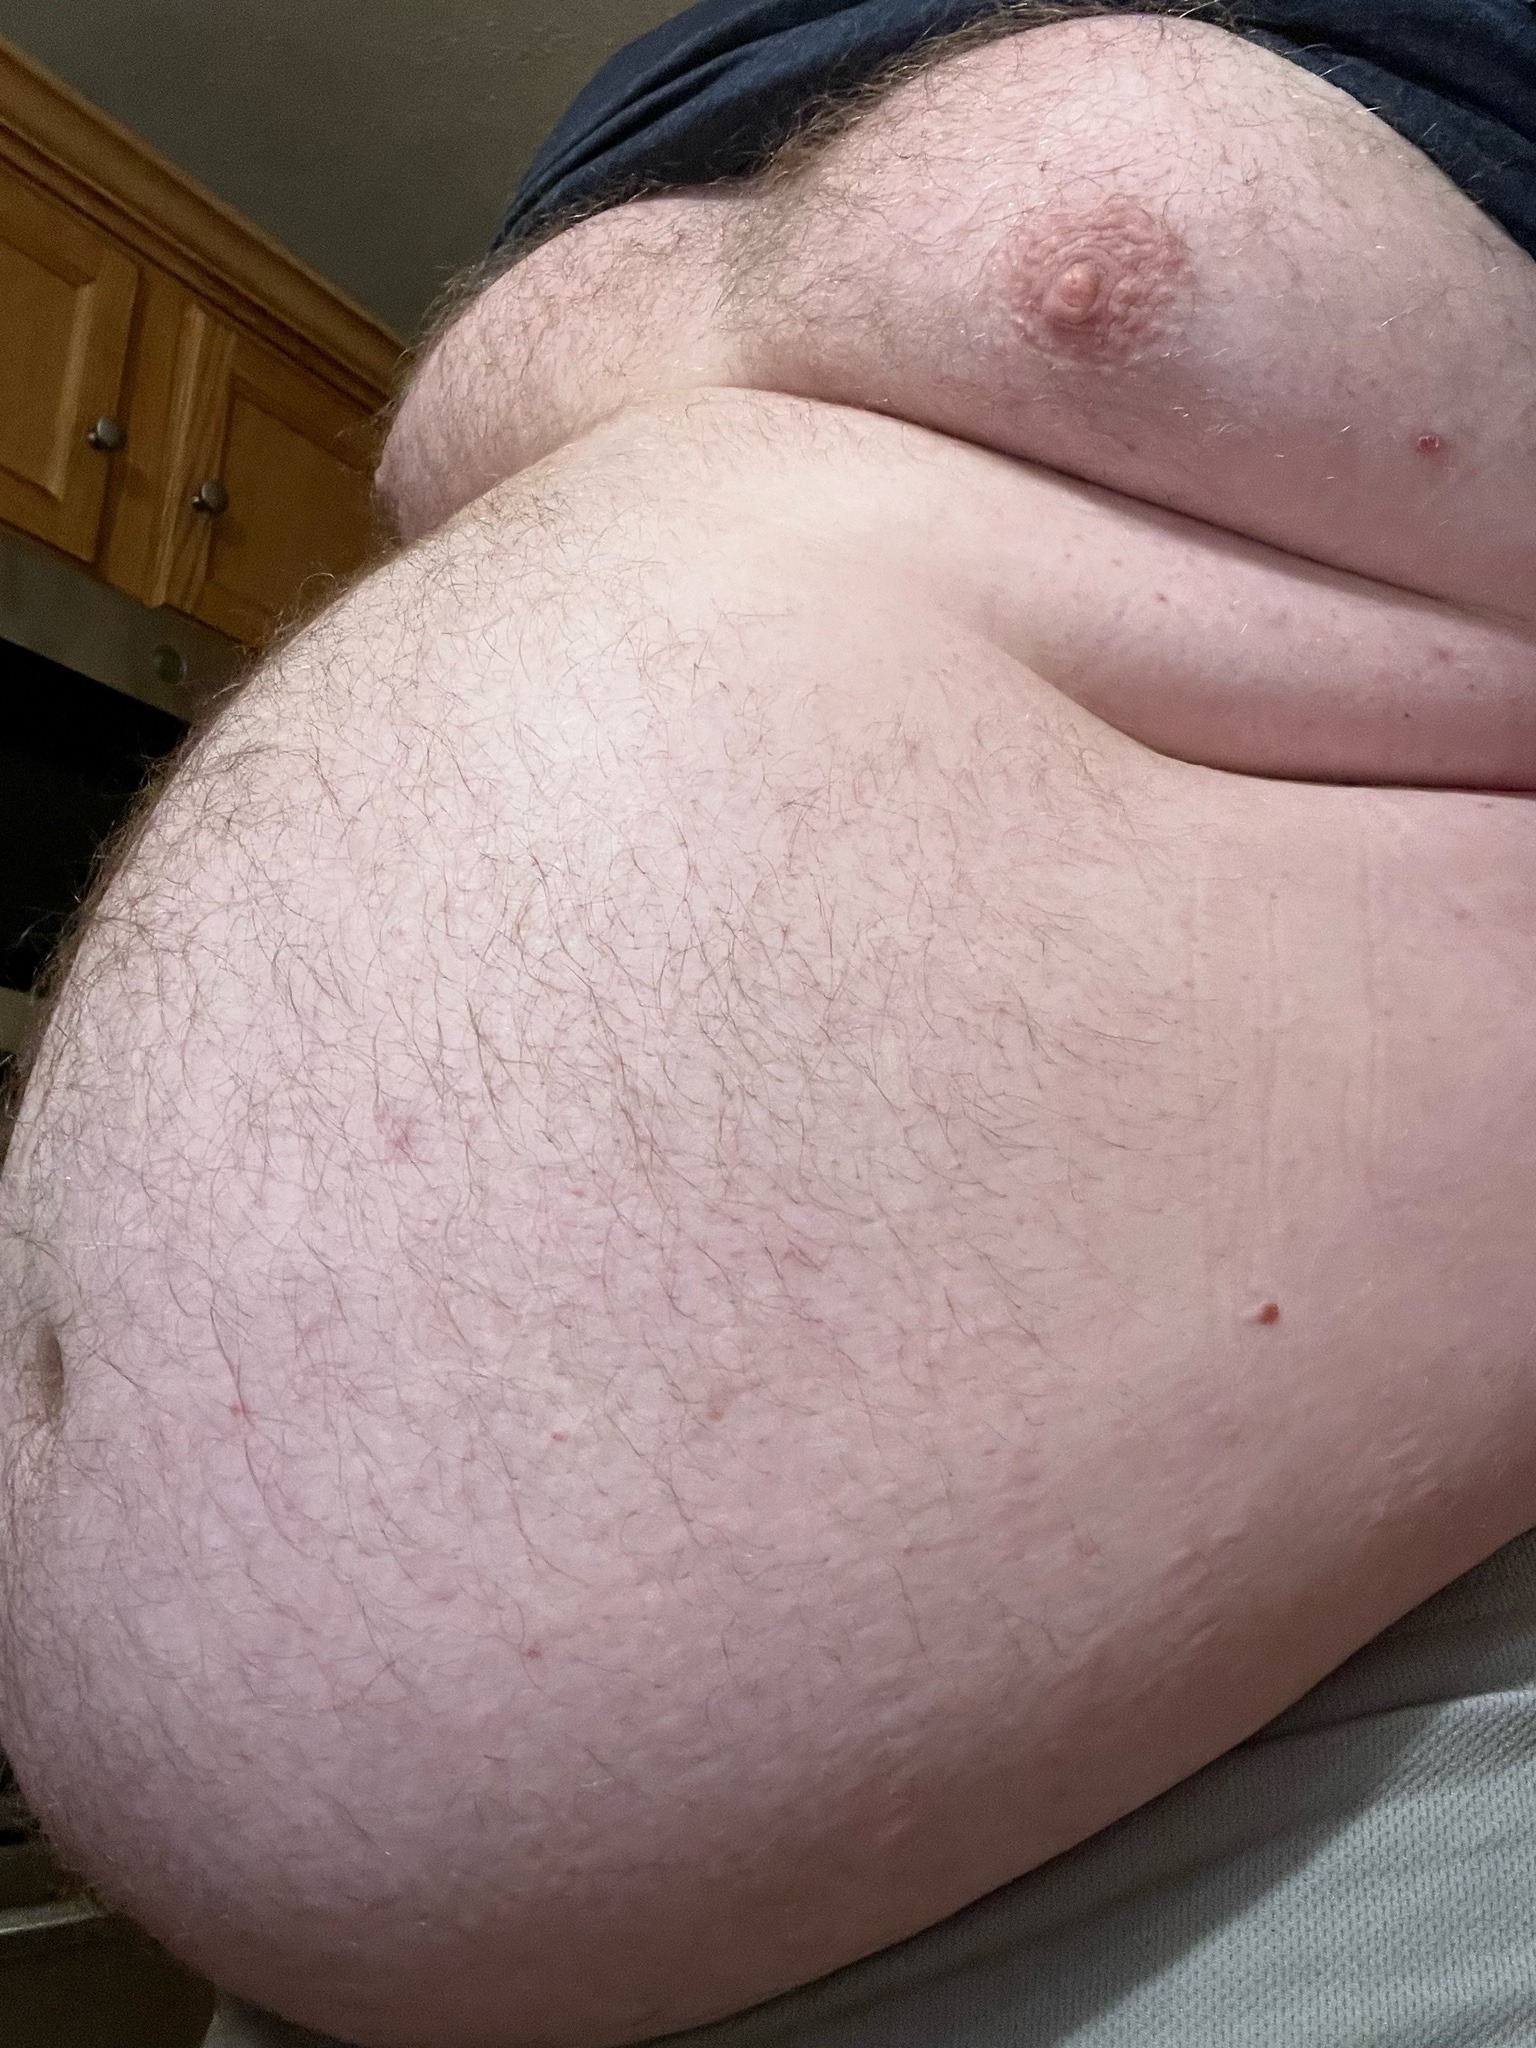 Porn randolphfatter:I fucking love getting fatter. photos